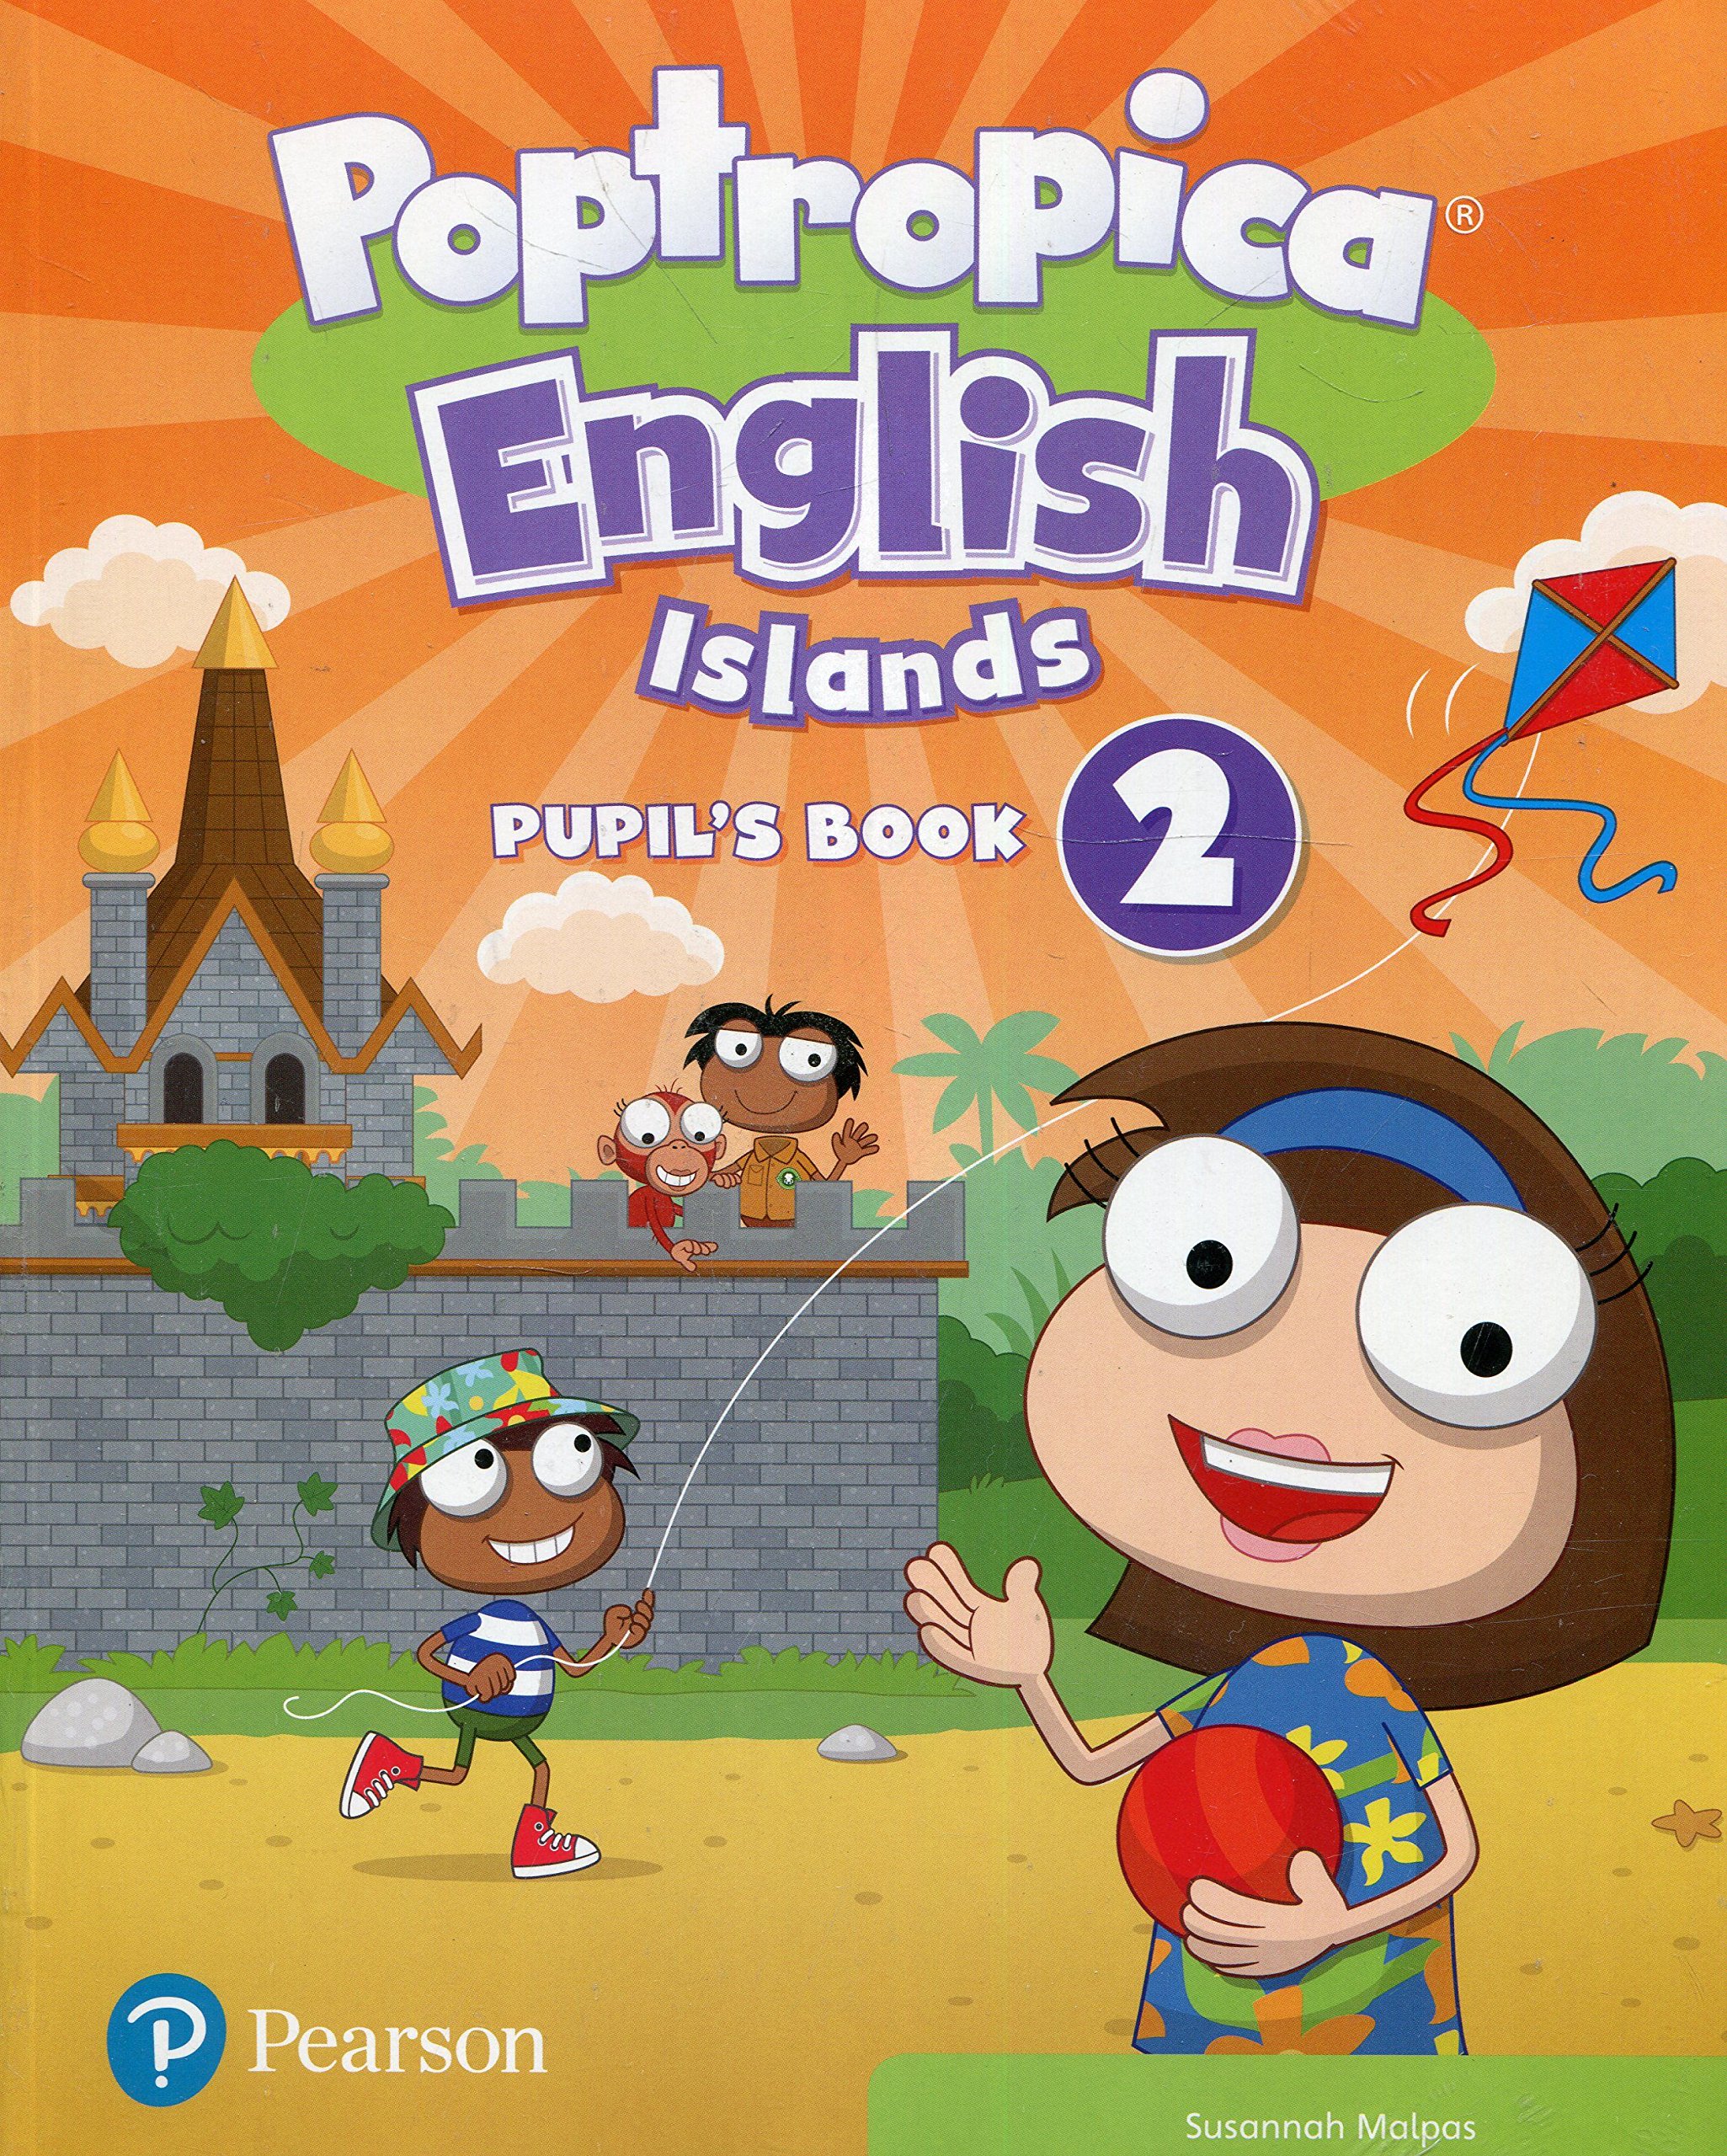 Poptropica islands. Poptropica 2 pupil's book. Poptropica English Islands 2. Pearson English Poptropica 2. Poptropica English Islands.